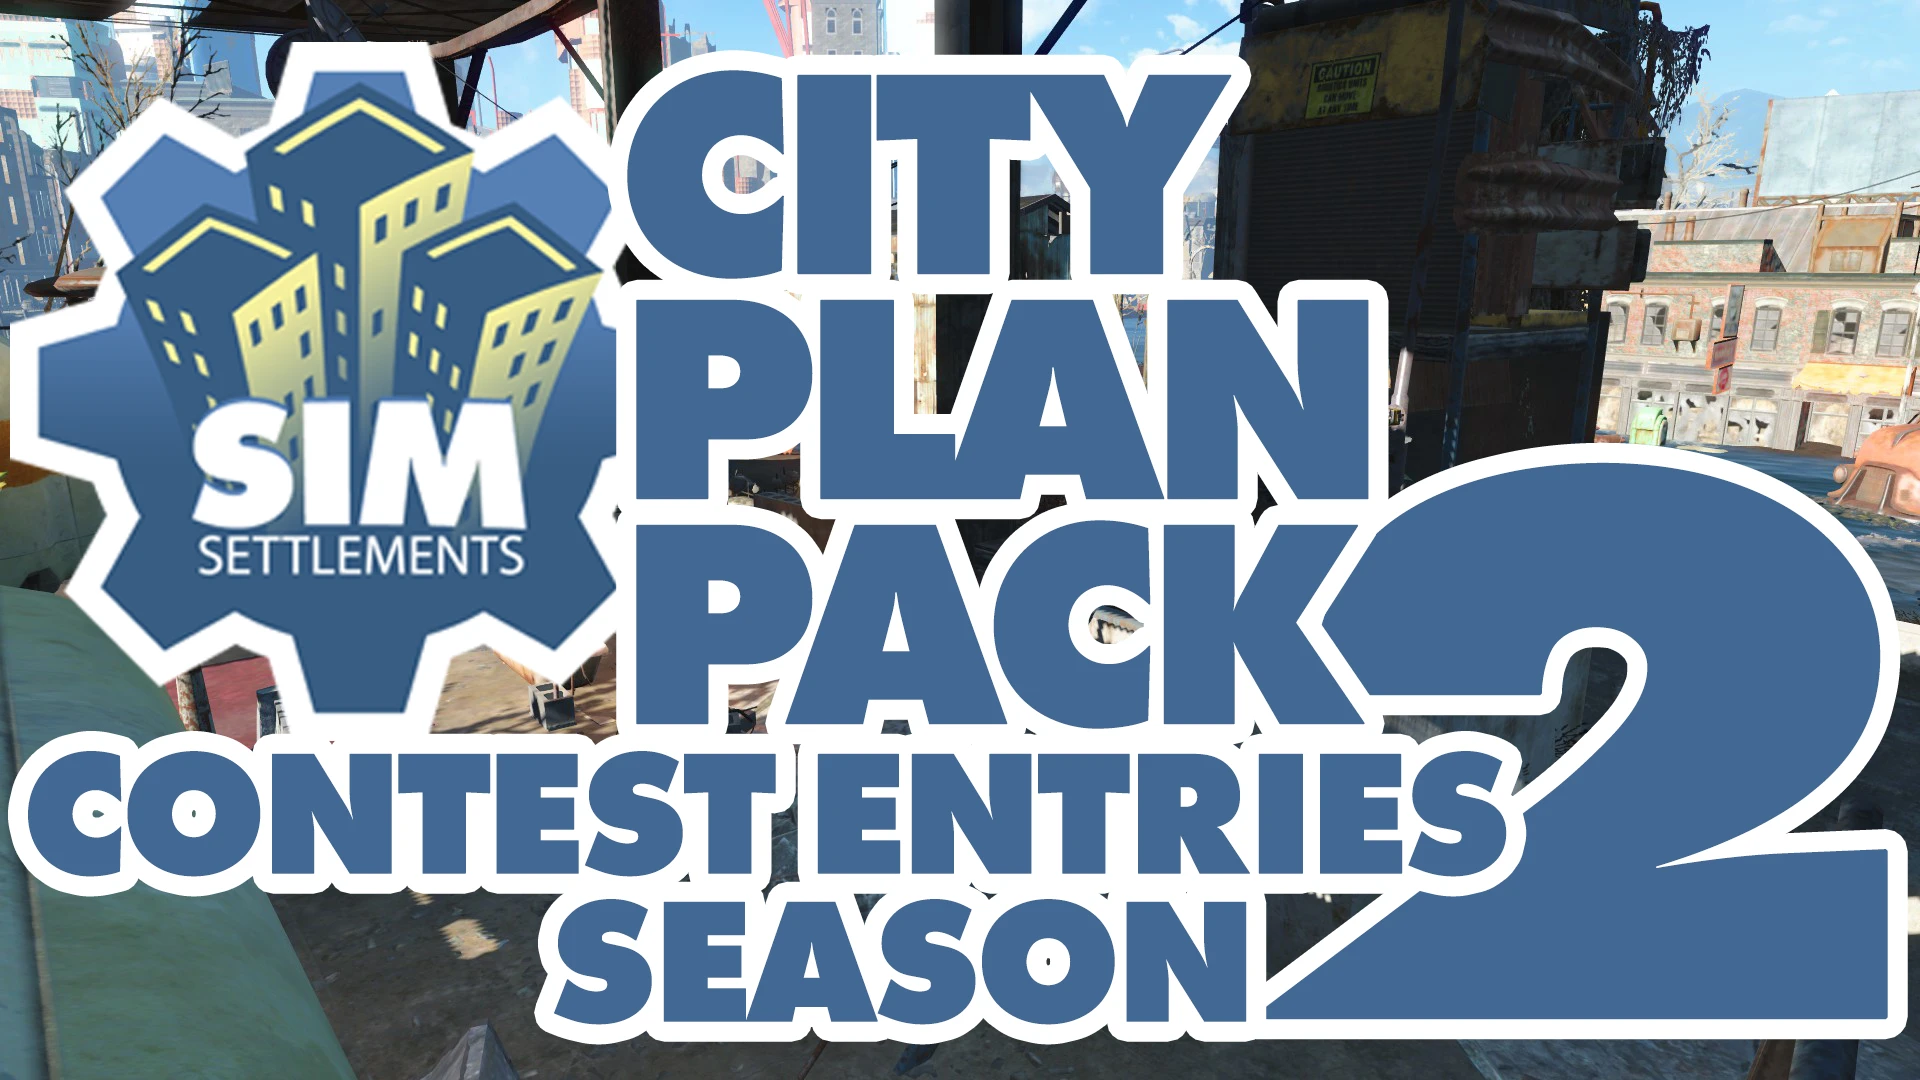 SIM Settlements: City Plan Pack - Contest entries - Vault 88 [xb1]. SIM Settlements: City Plan Pack - Contest entries - Vault 88 [xb1 как запустить.